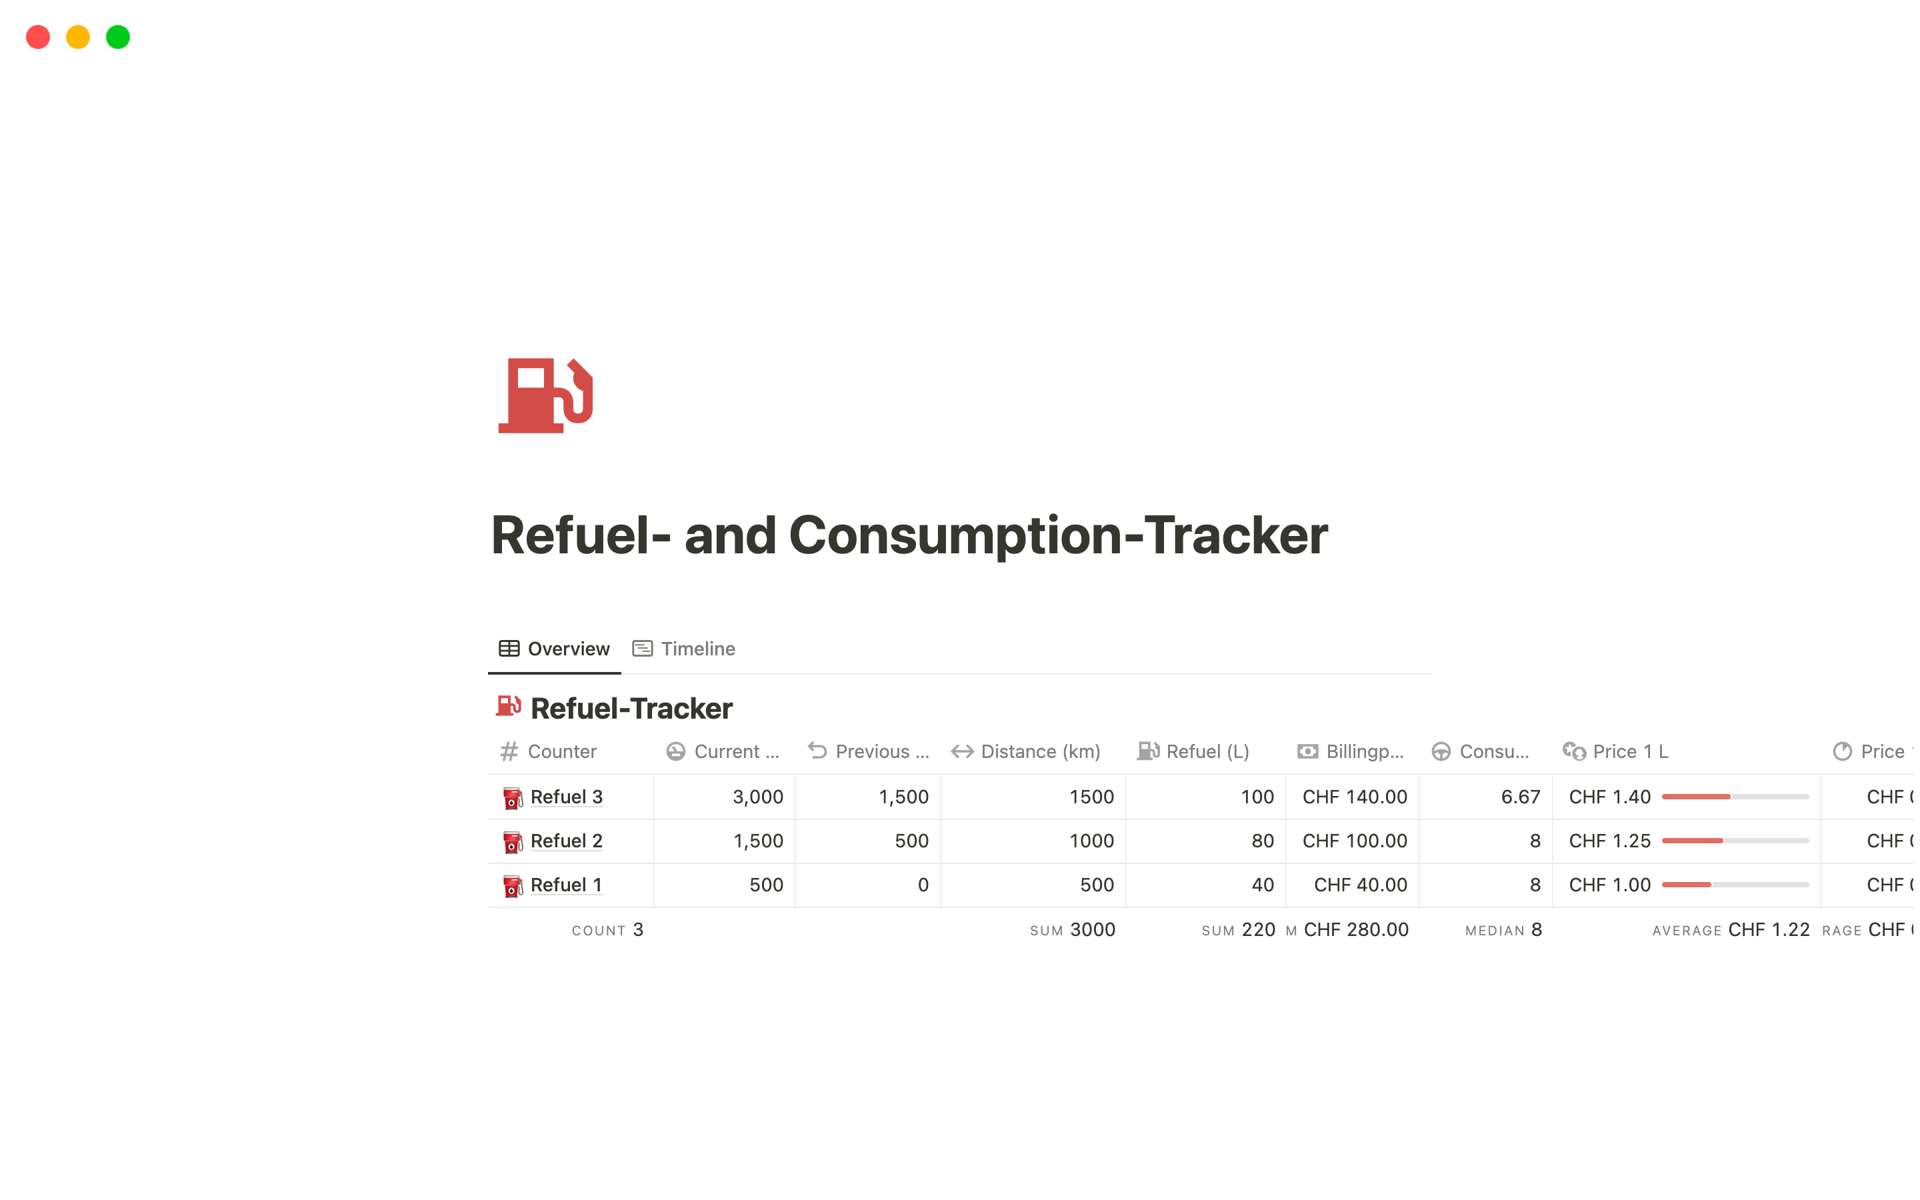 Vista previa de una plantilla para Refuel- and Consumption-Tracker